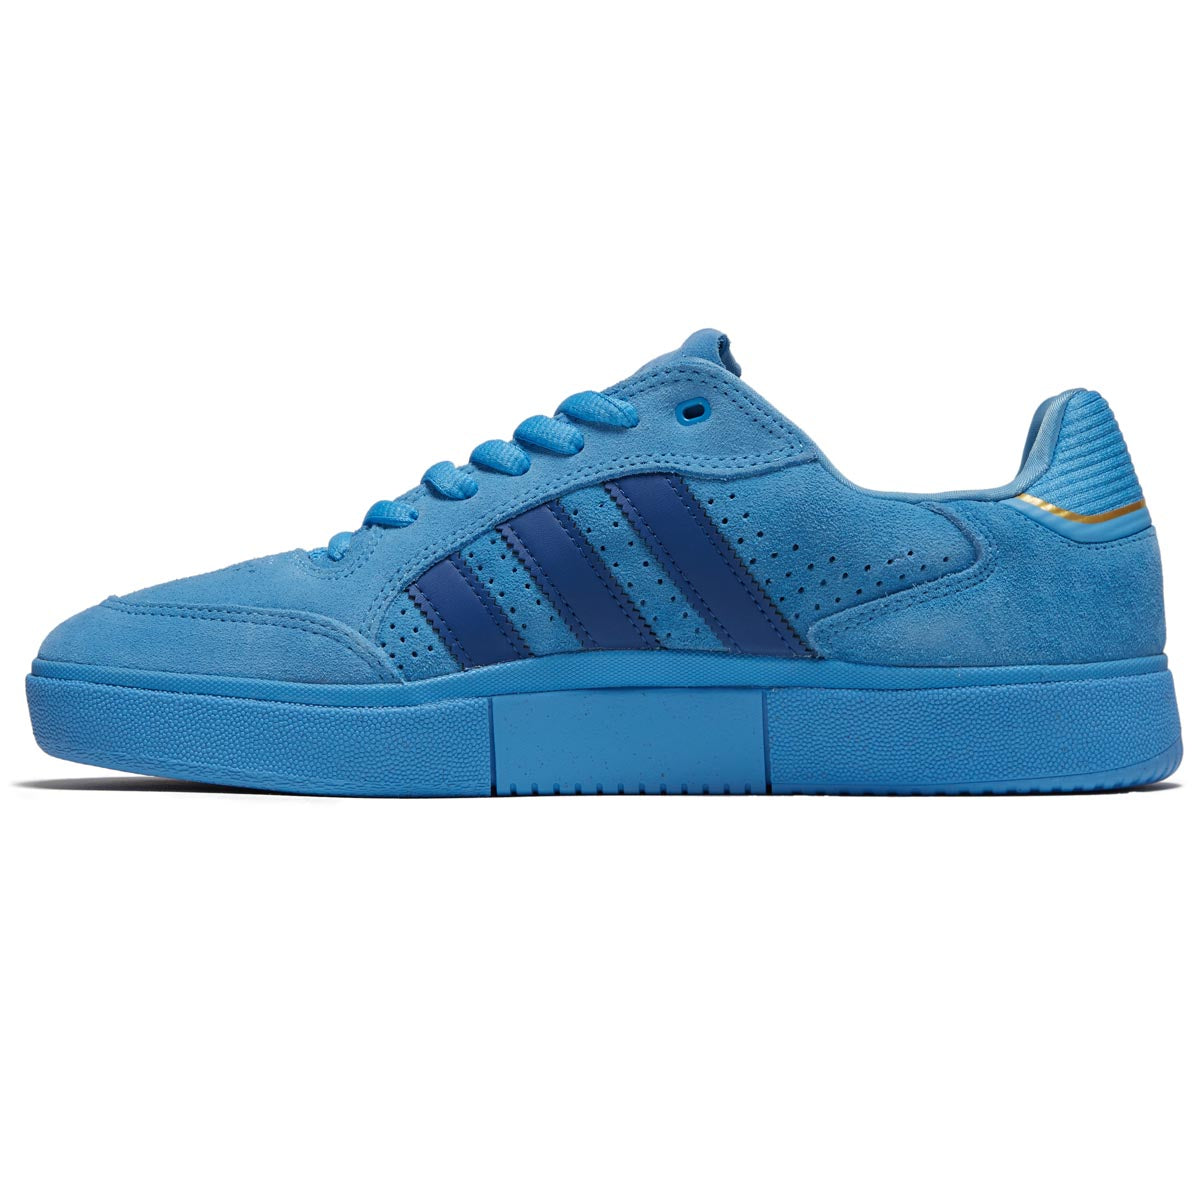 Adidas Tyshawn Low Shoes - Blue Burst/Royal/Bluebird image 2